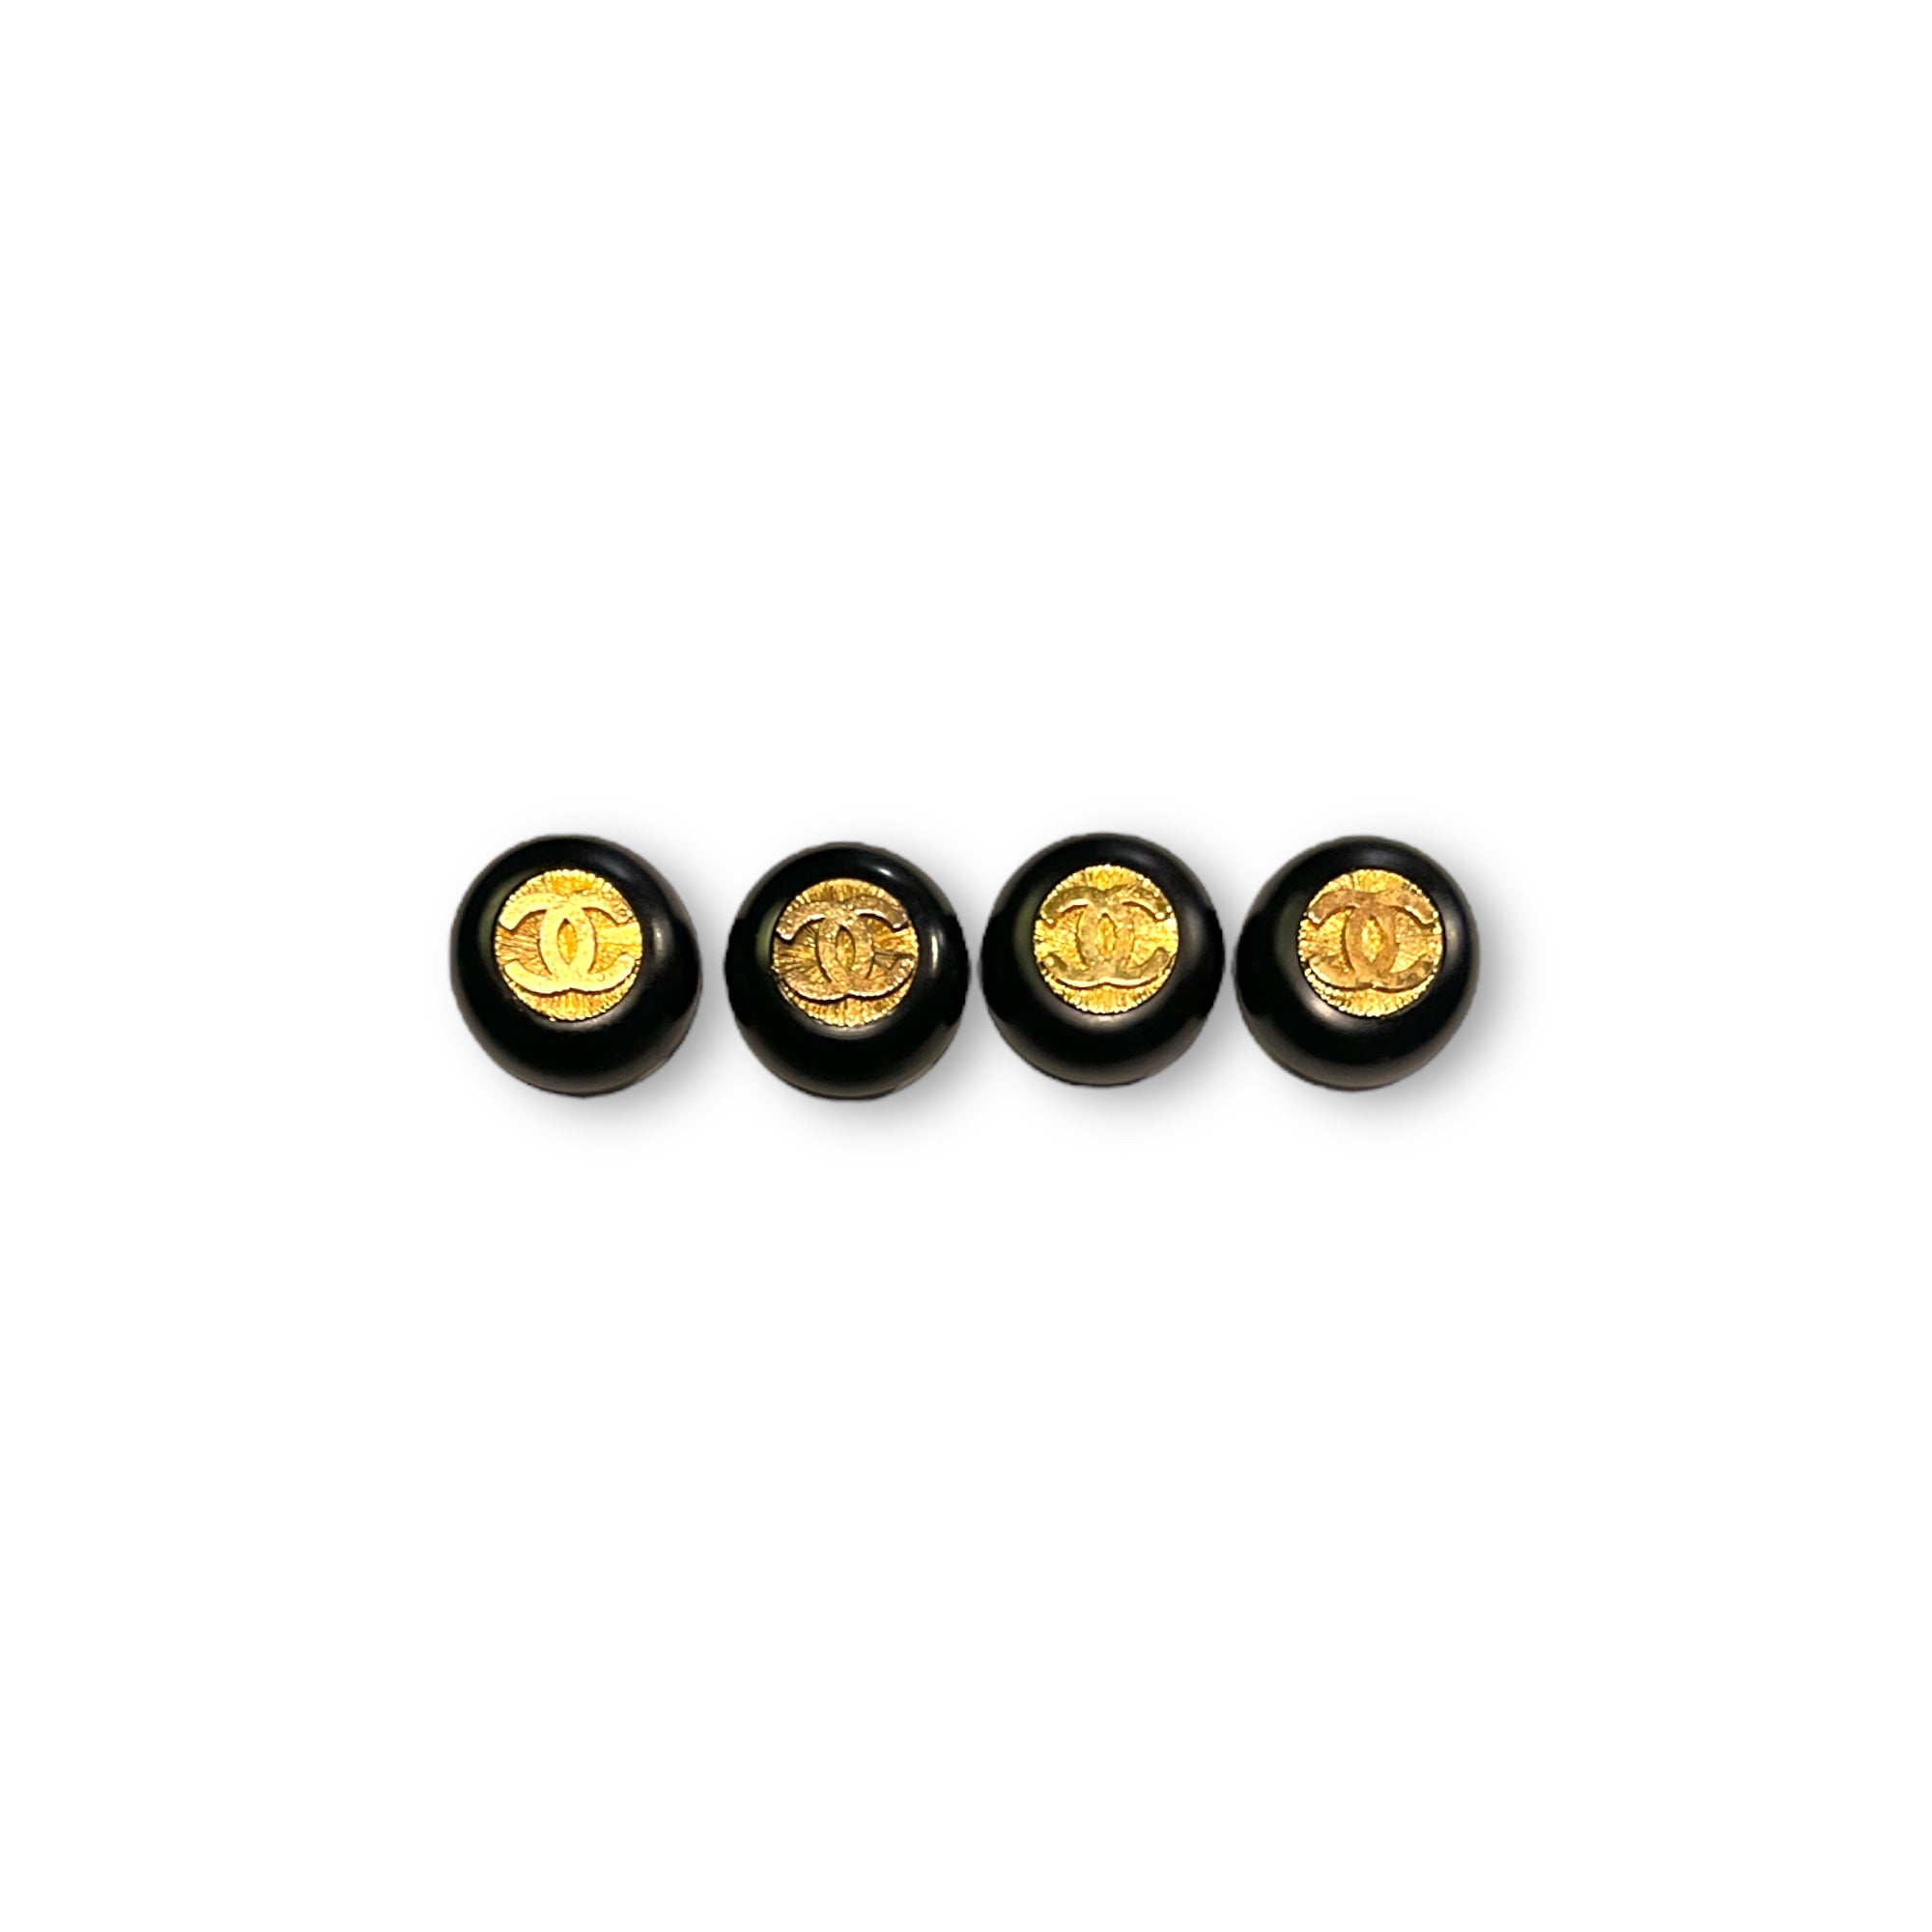 CHANEL Vintage AUTHENTIC Gold Metal CC Interlocking Logo Set in Black Plastic Buttons (Four)